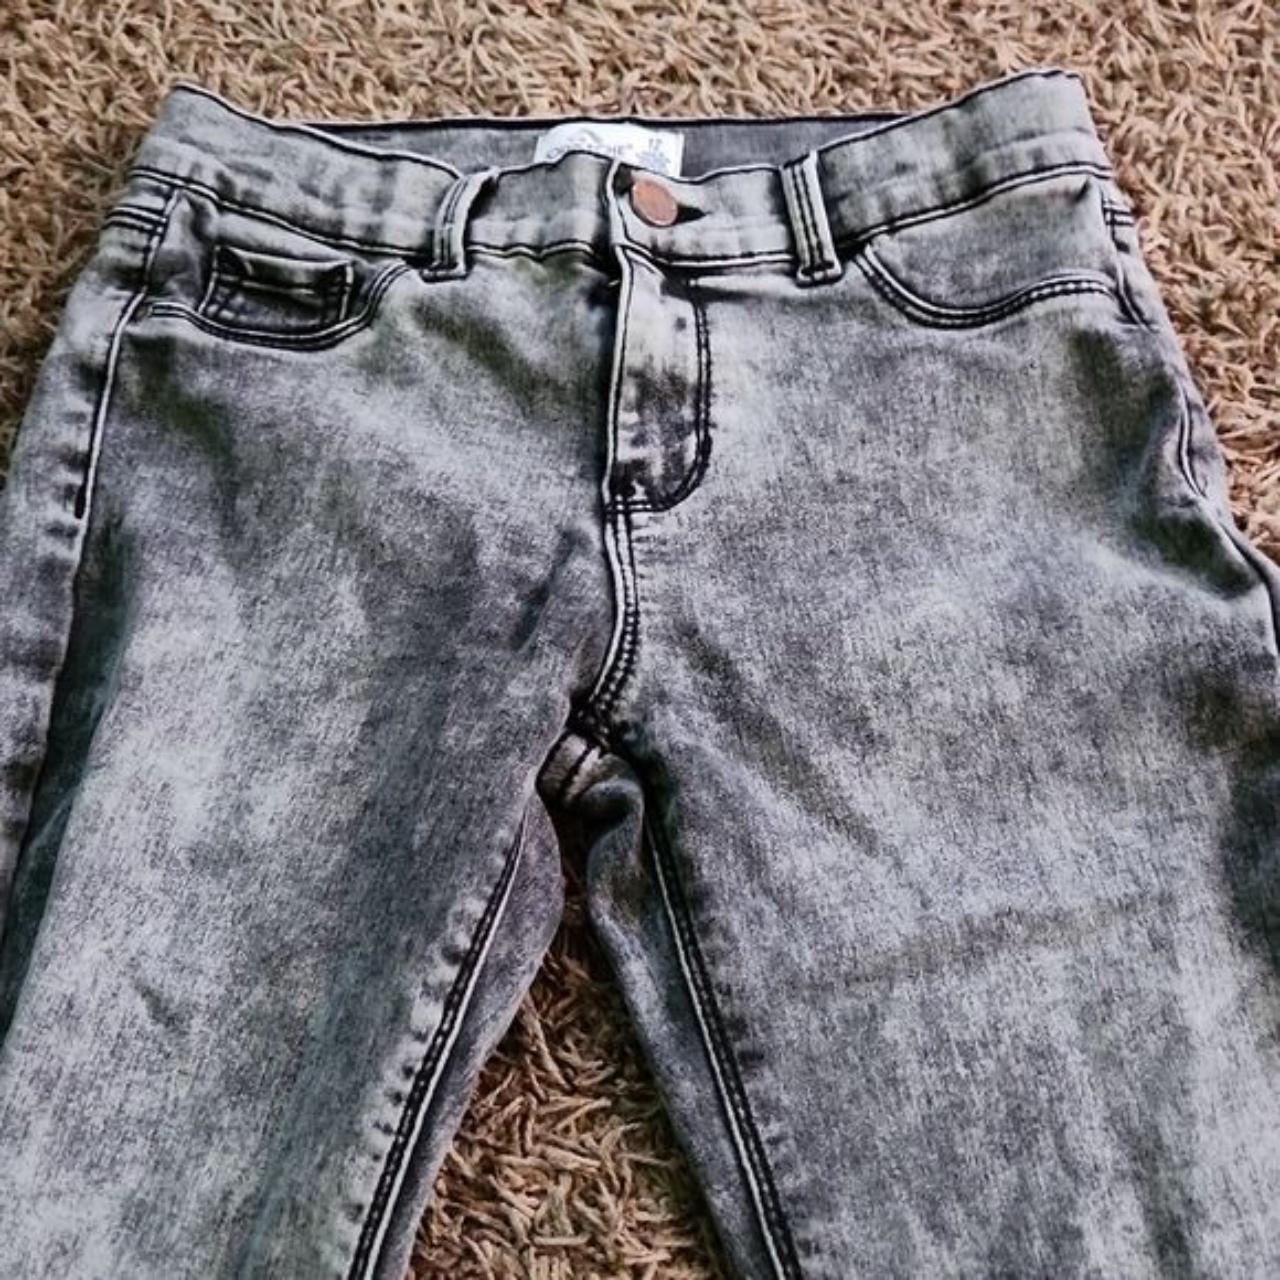 JORDACHE Girls Skinny Jeans SLIM NEW WITHOUT TAGS - Depop